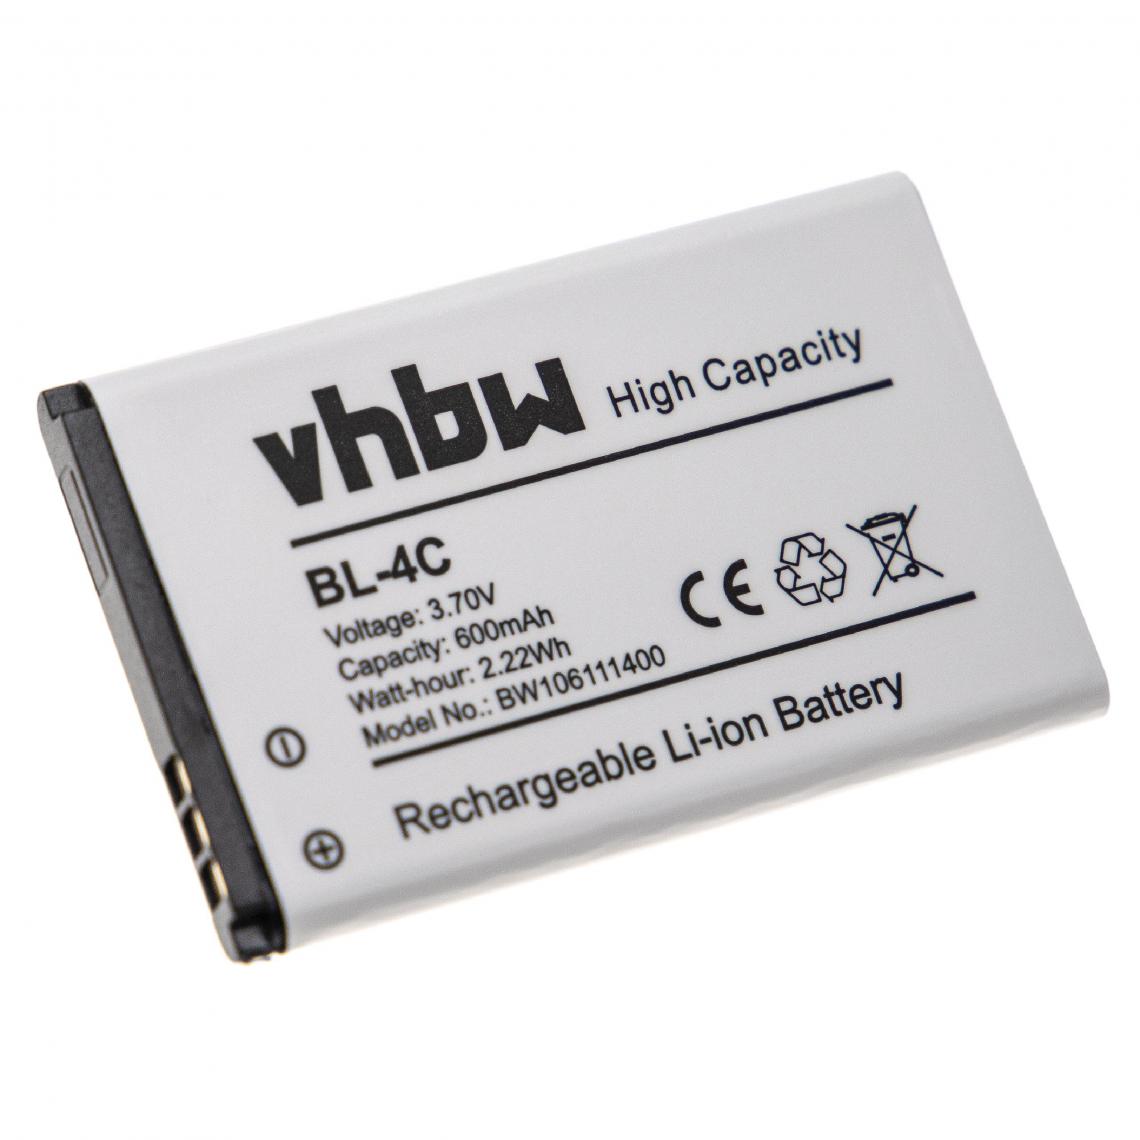 Vhbw - vhbw Batterie remplacement pour Kazam KAC5, KAC5-HELBE0003594, KALB2, KALB2-MXDB01351 pour smartphone (600mAh, 3,7V, Li-ion) - Batterie téléphone